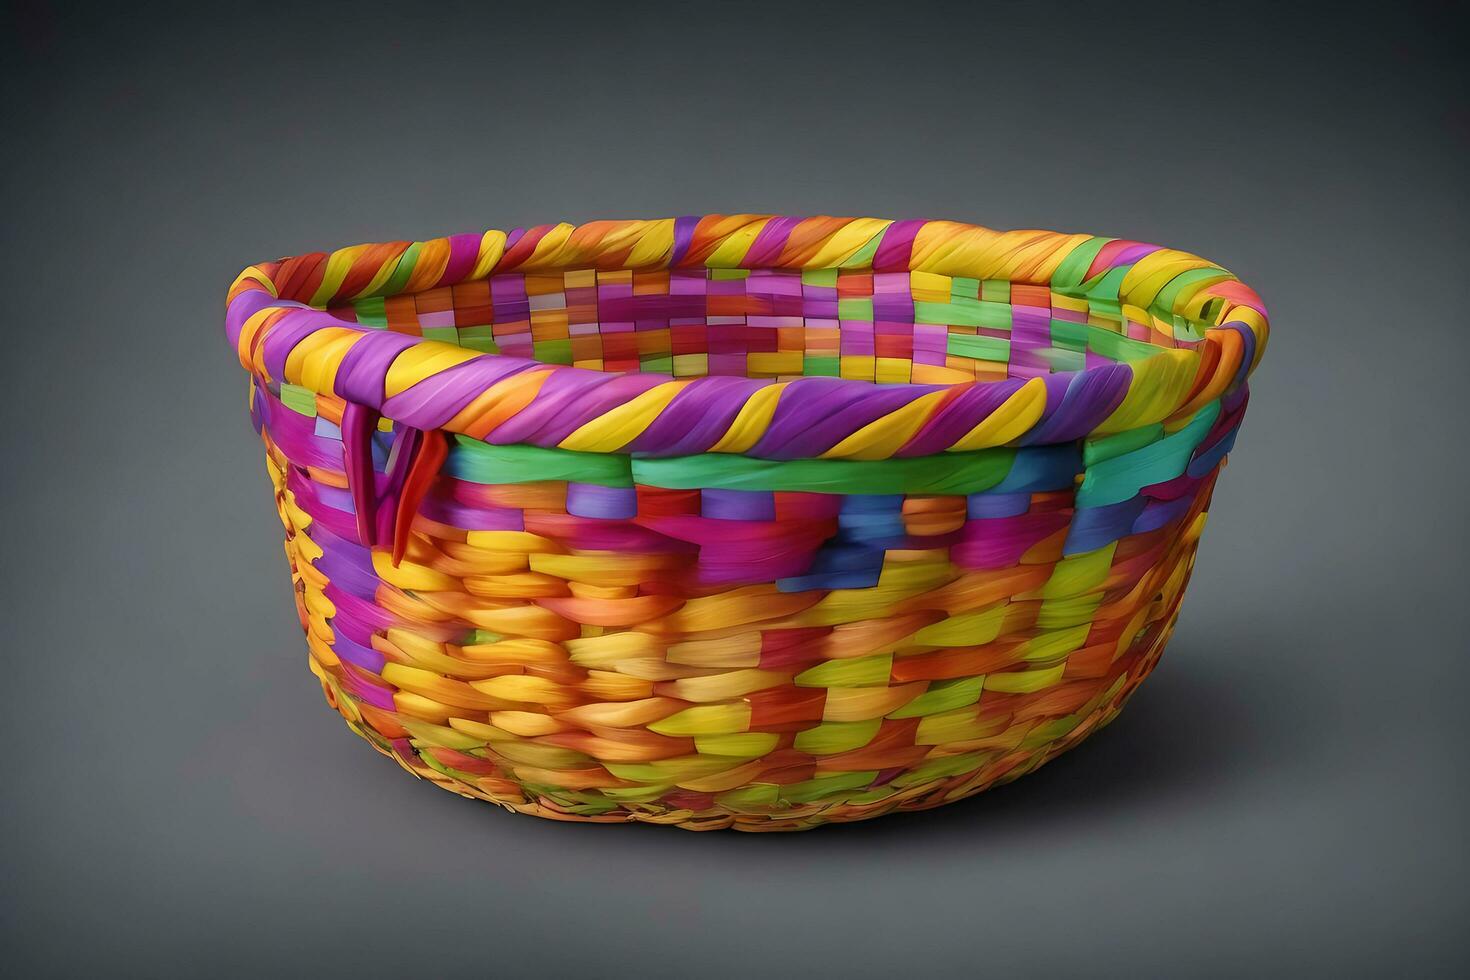 compras bolso vacío mimbre cesta con vibrante colores, ai generado gratis foto